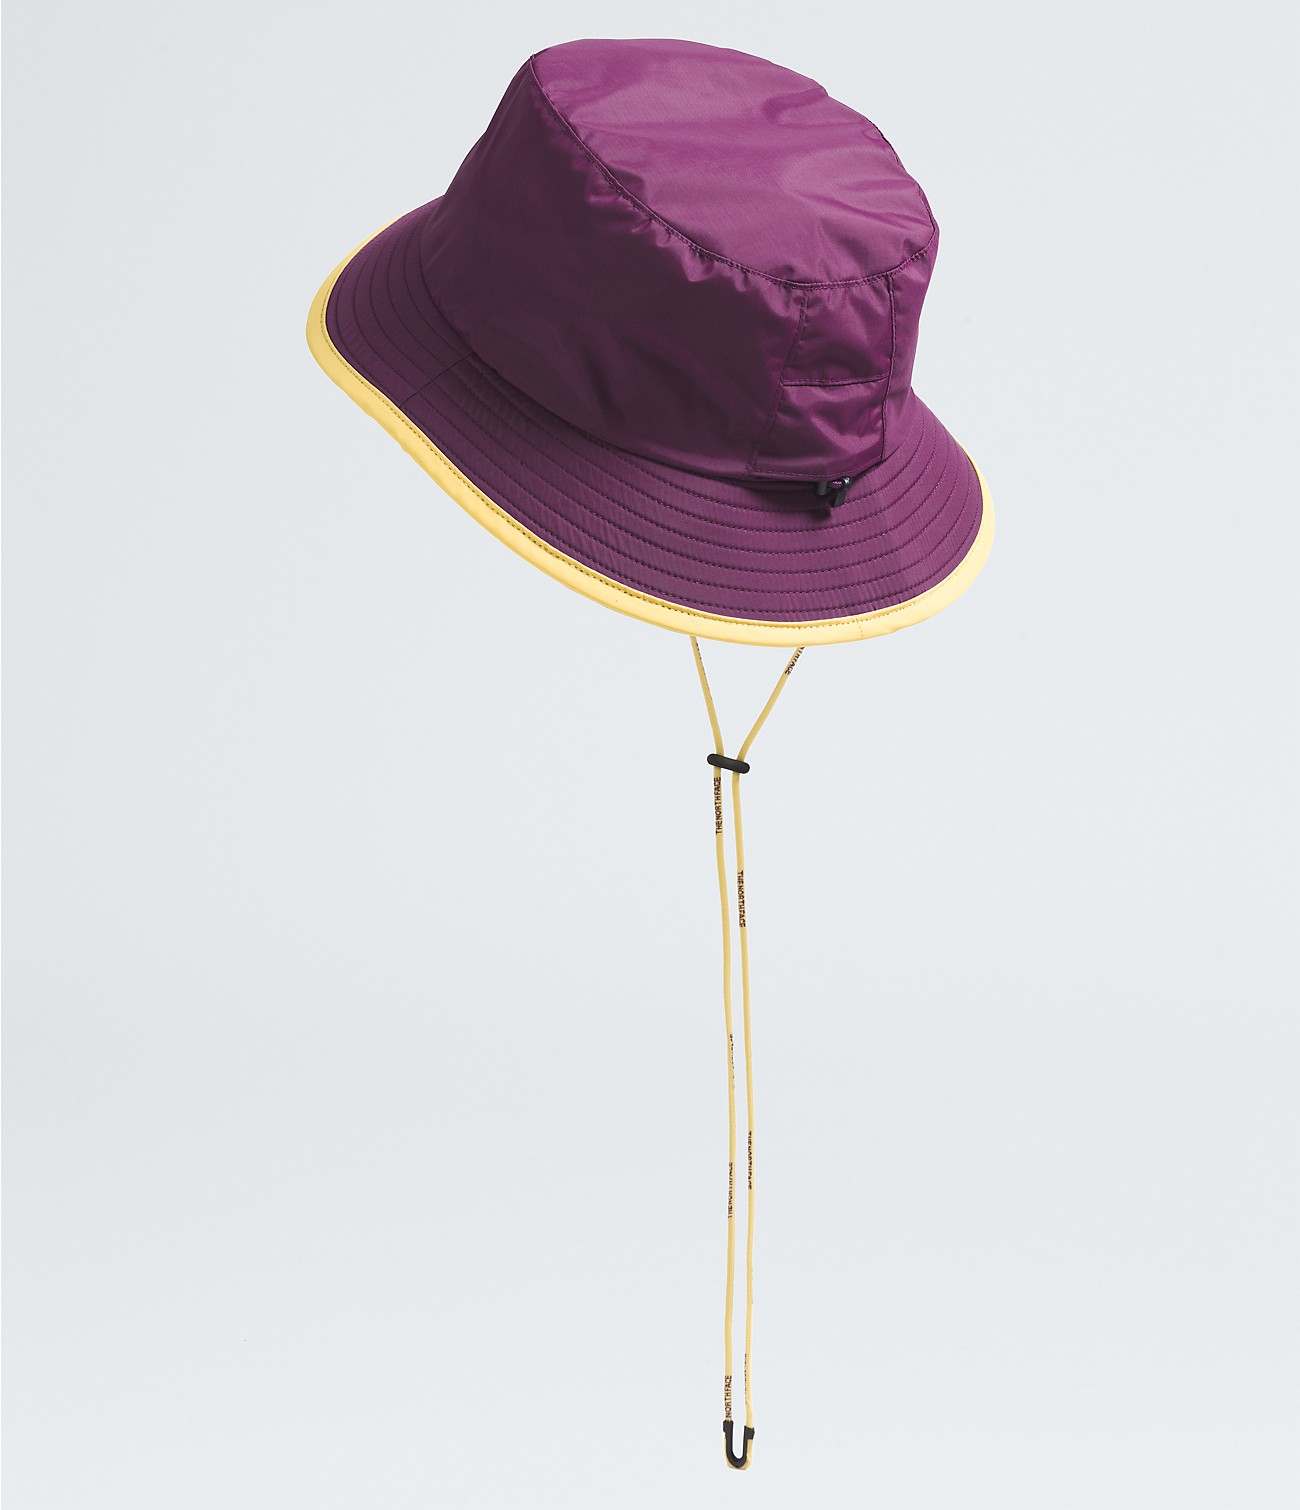 Antora Rain Bucket Hat | The North Face